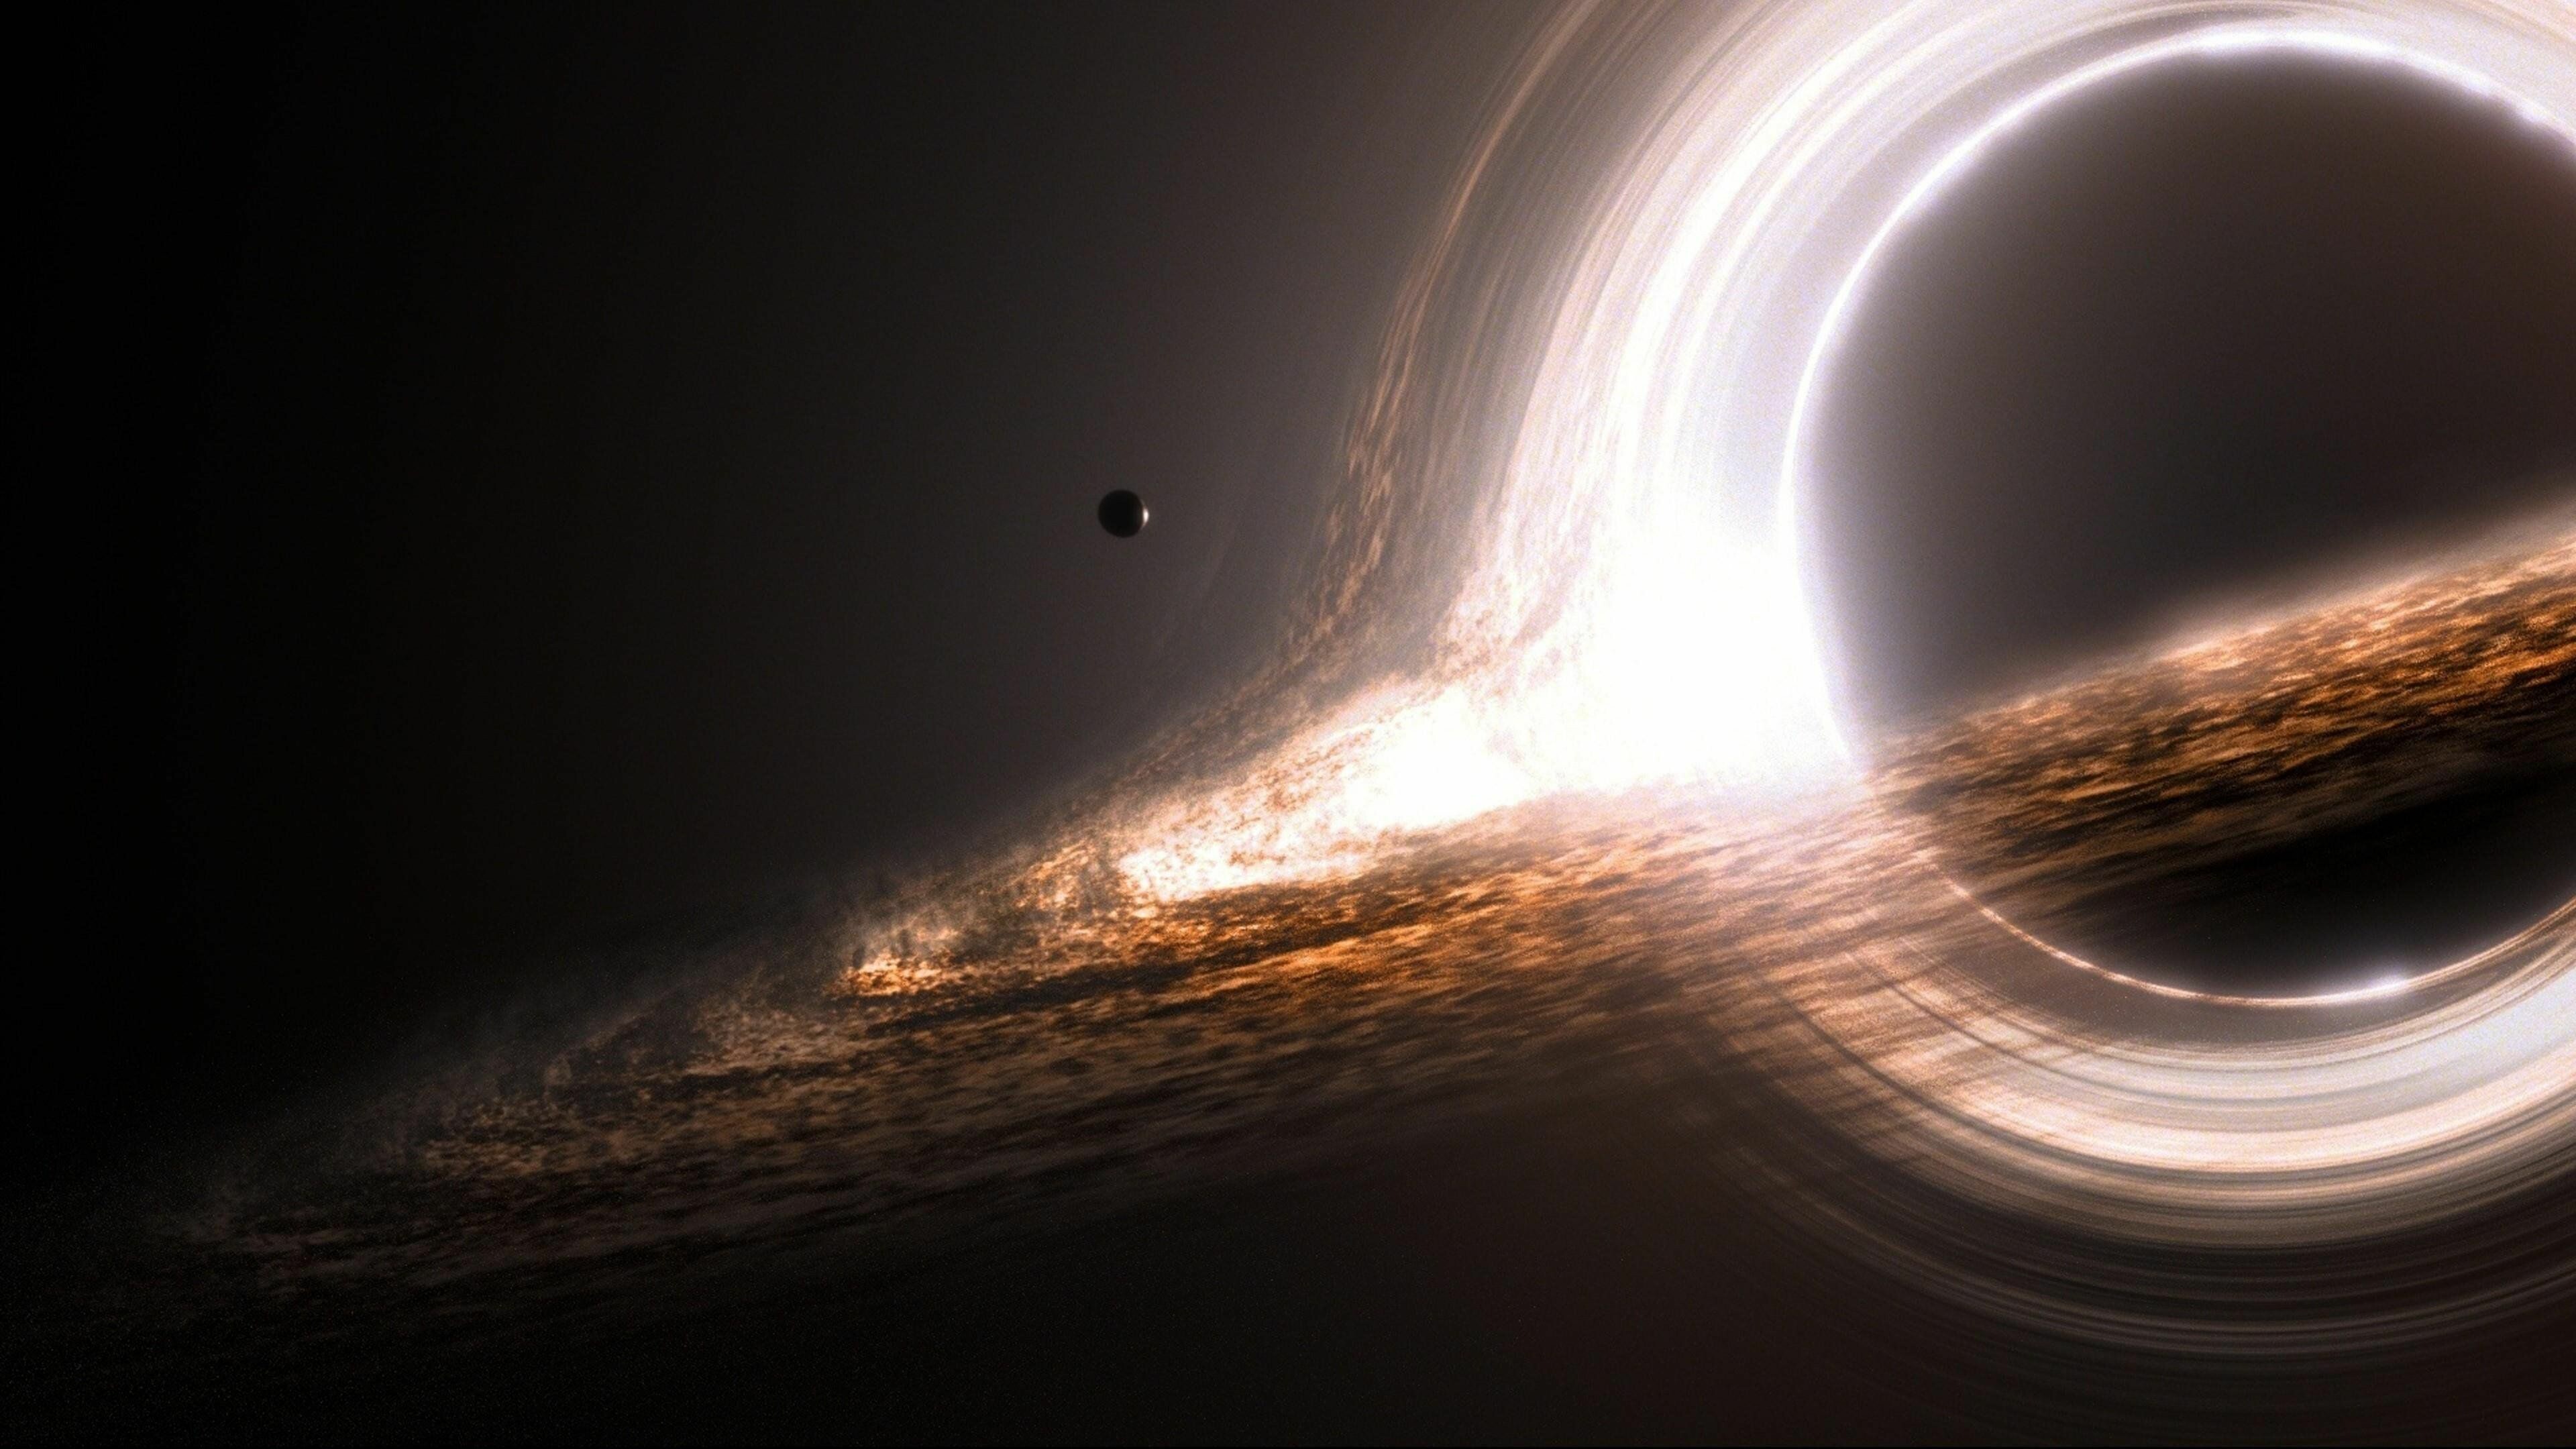 Black hole, minimal, blur, NASA, 2019 Wallpaper | Space and astronomy, Black  hole wallpaper, Outer space photos